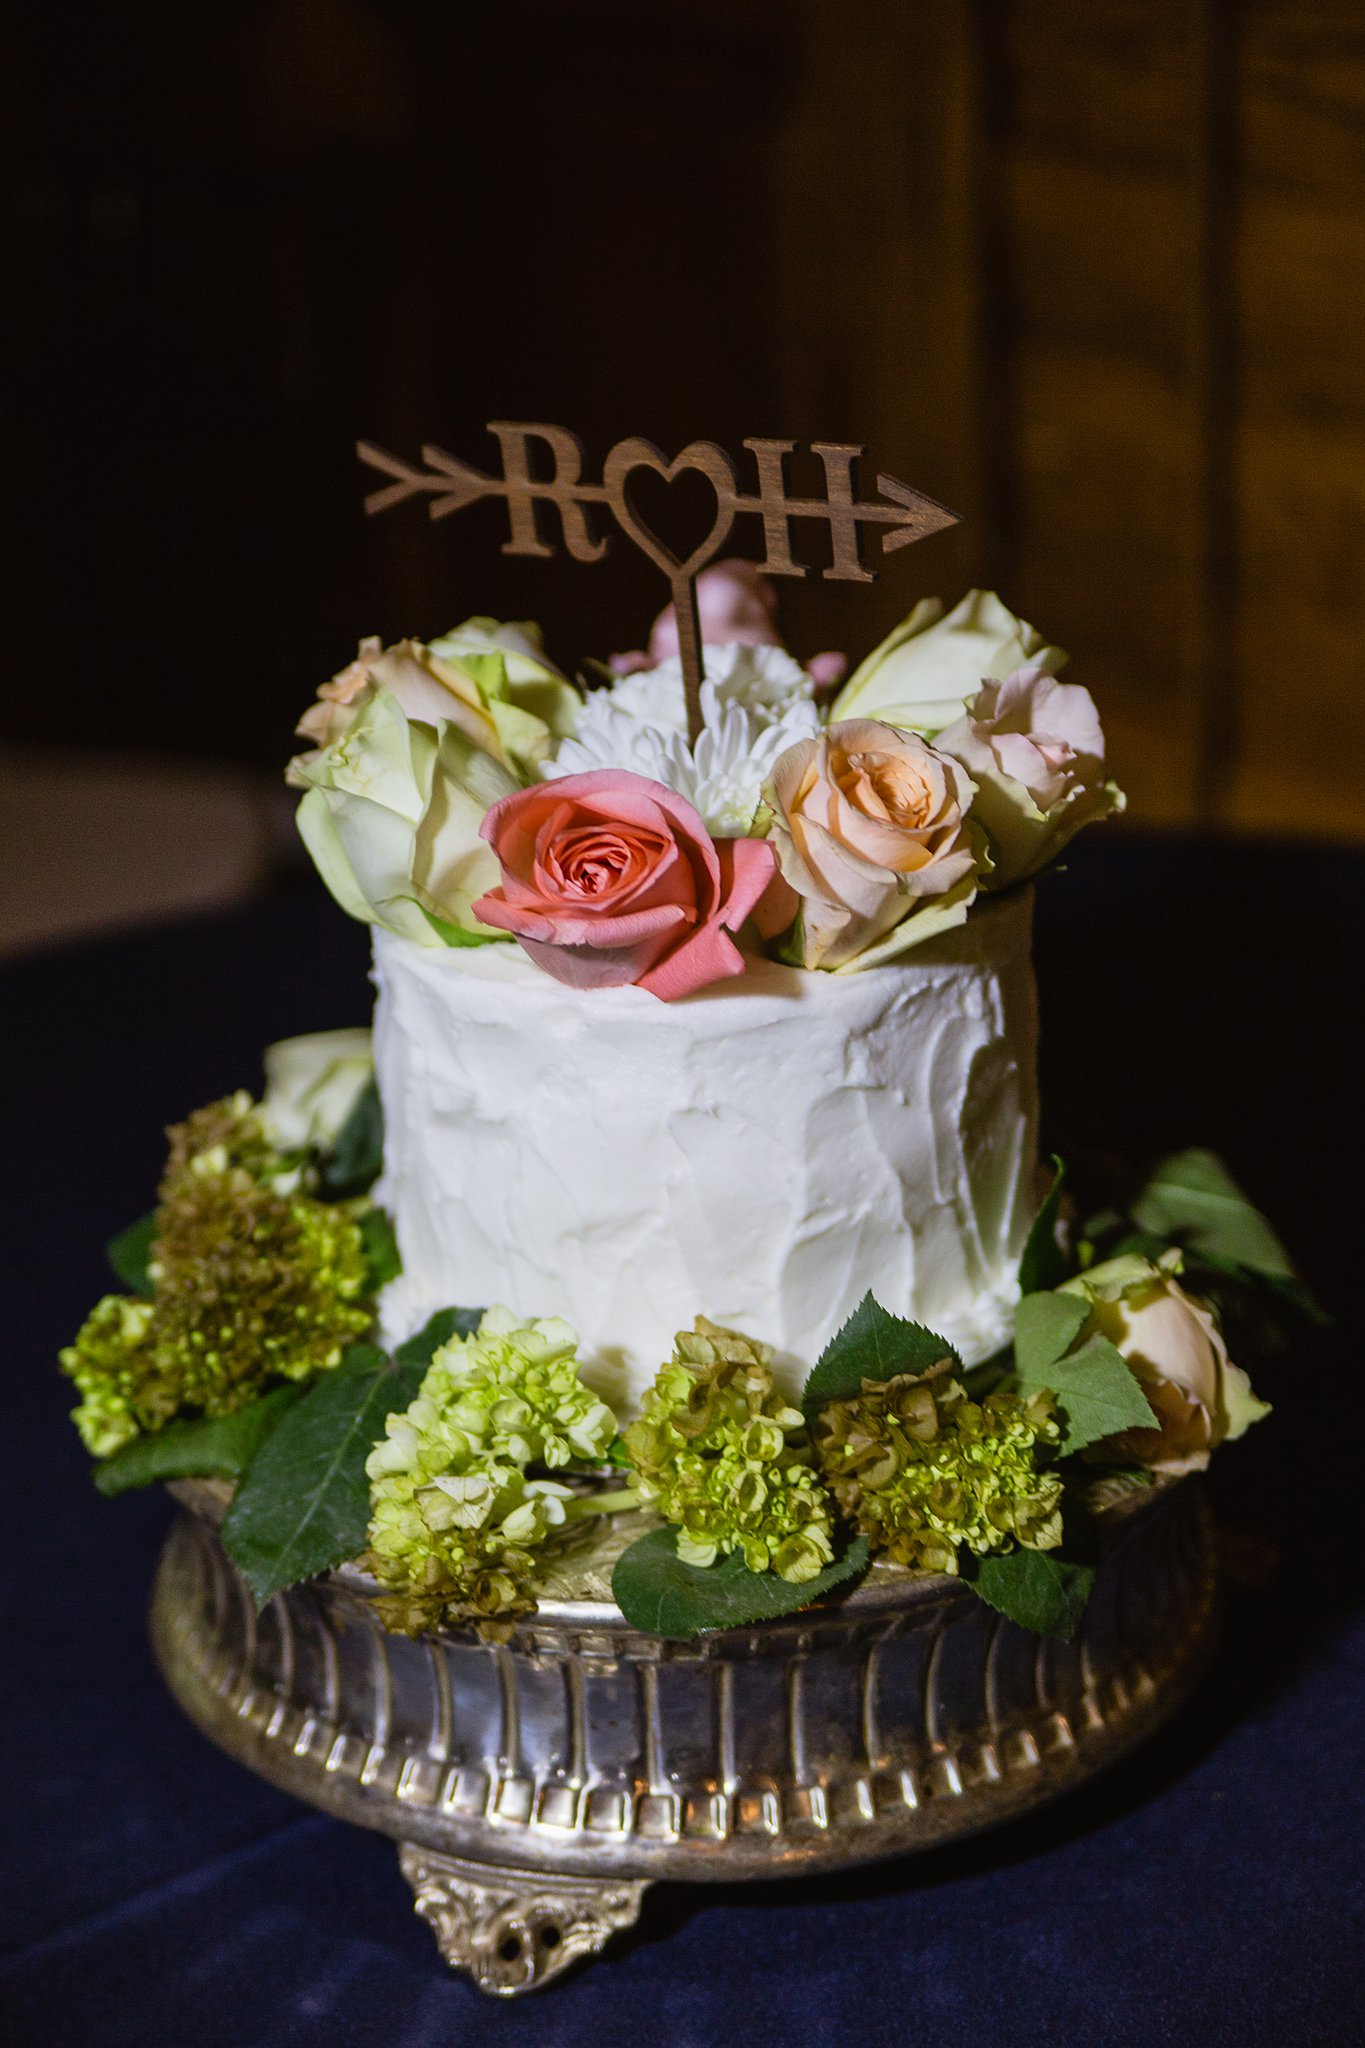 Simple, rustic wedding cake by Arizona wedding photographer PMA Photography.